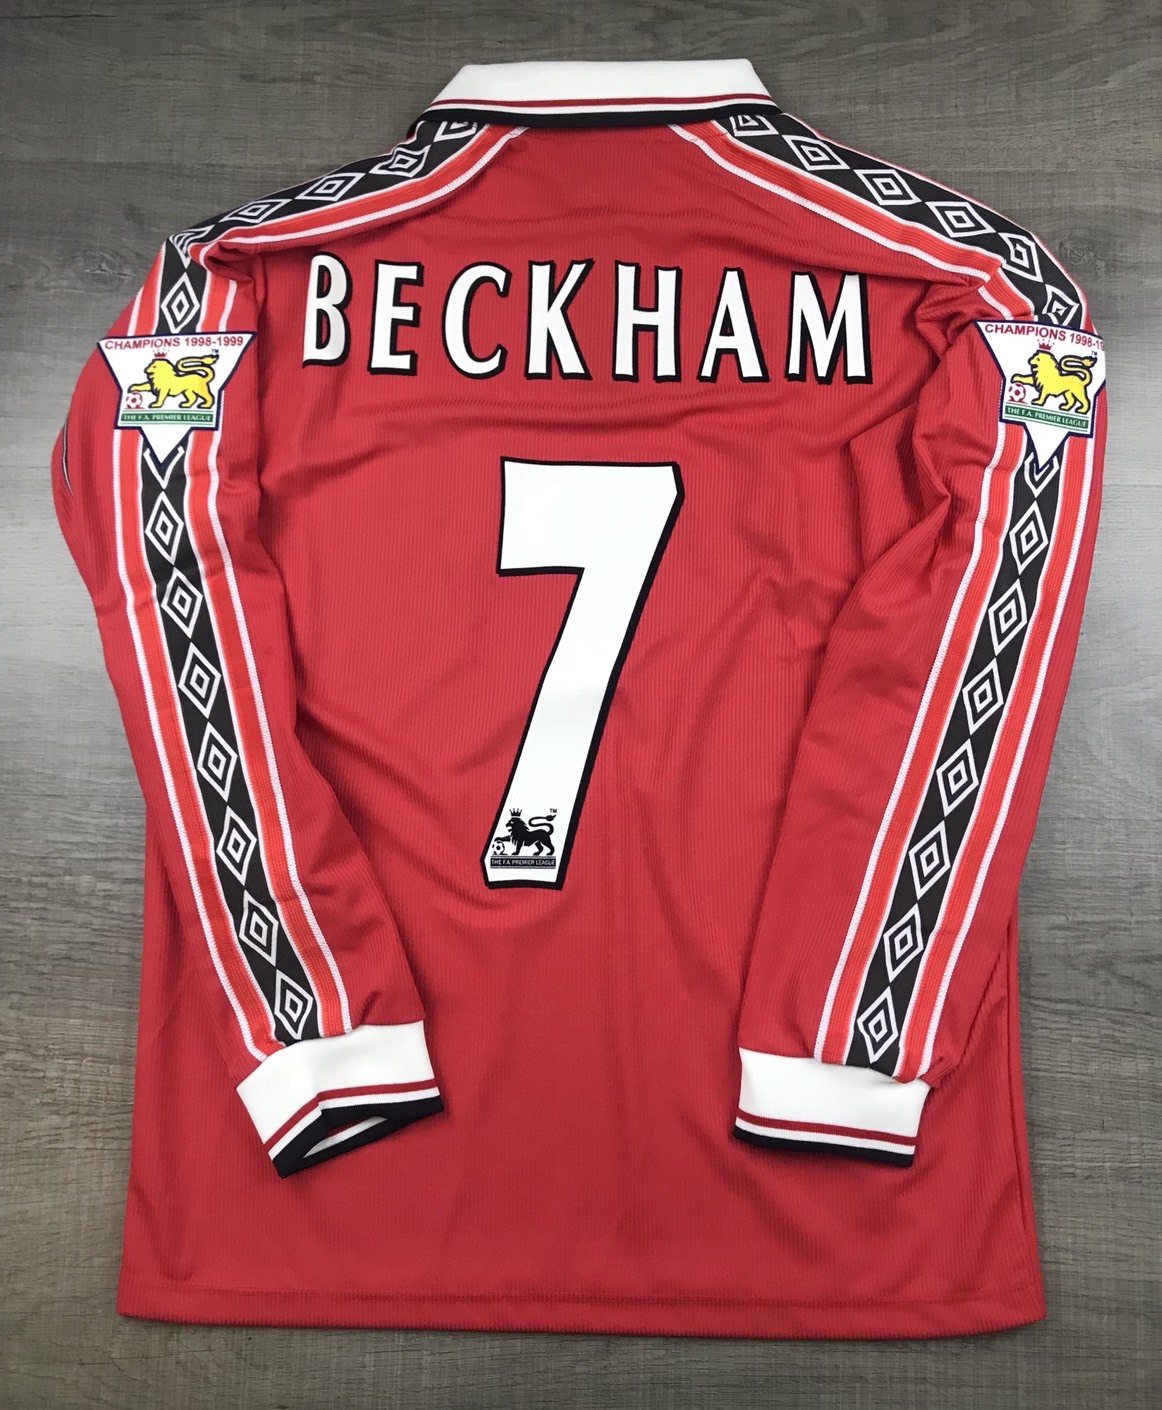 Retro Manchester United 1998-99 Long Sleeve #7 BECKHAM Soccer Jersey